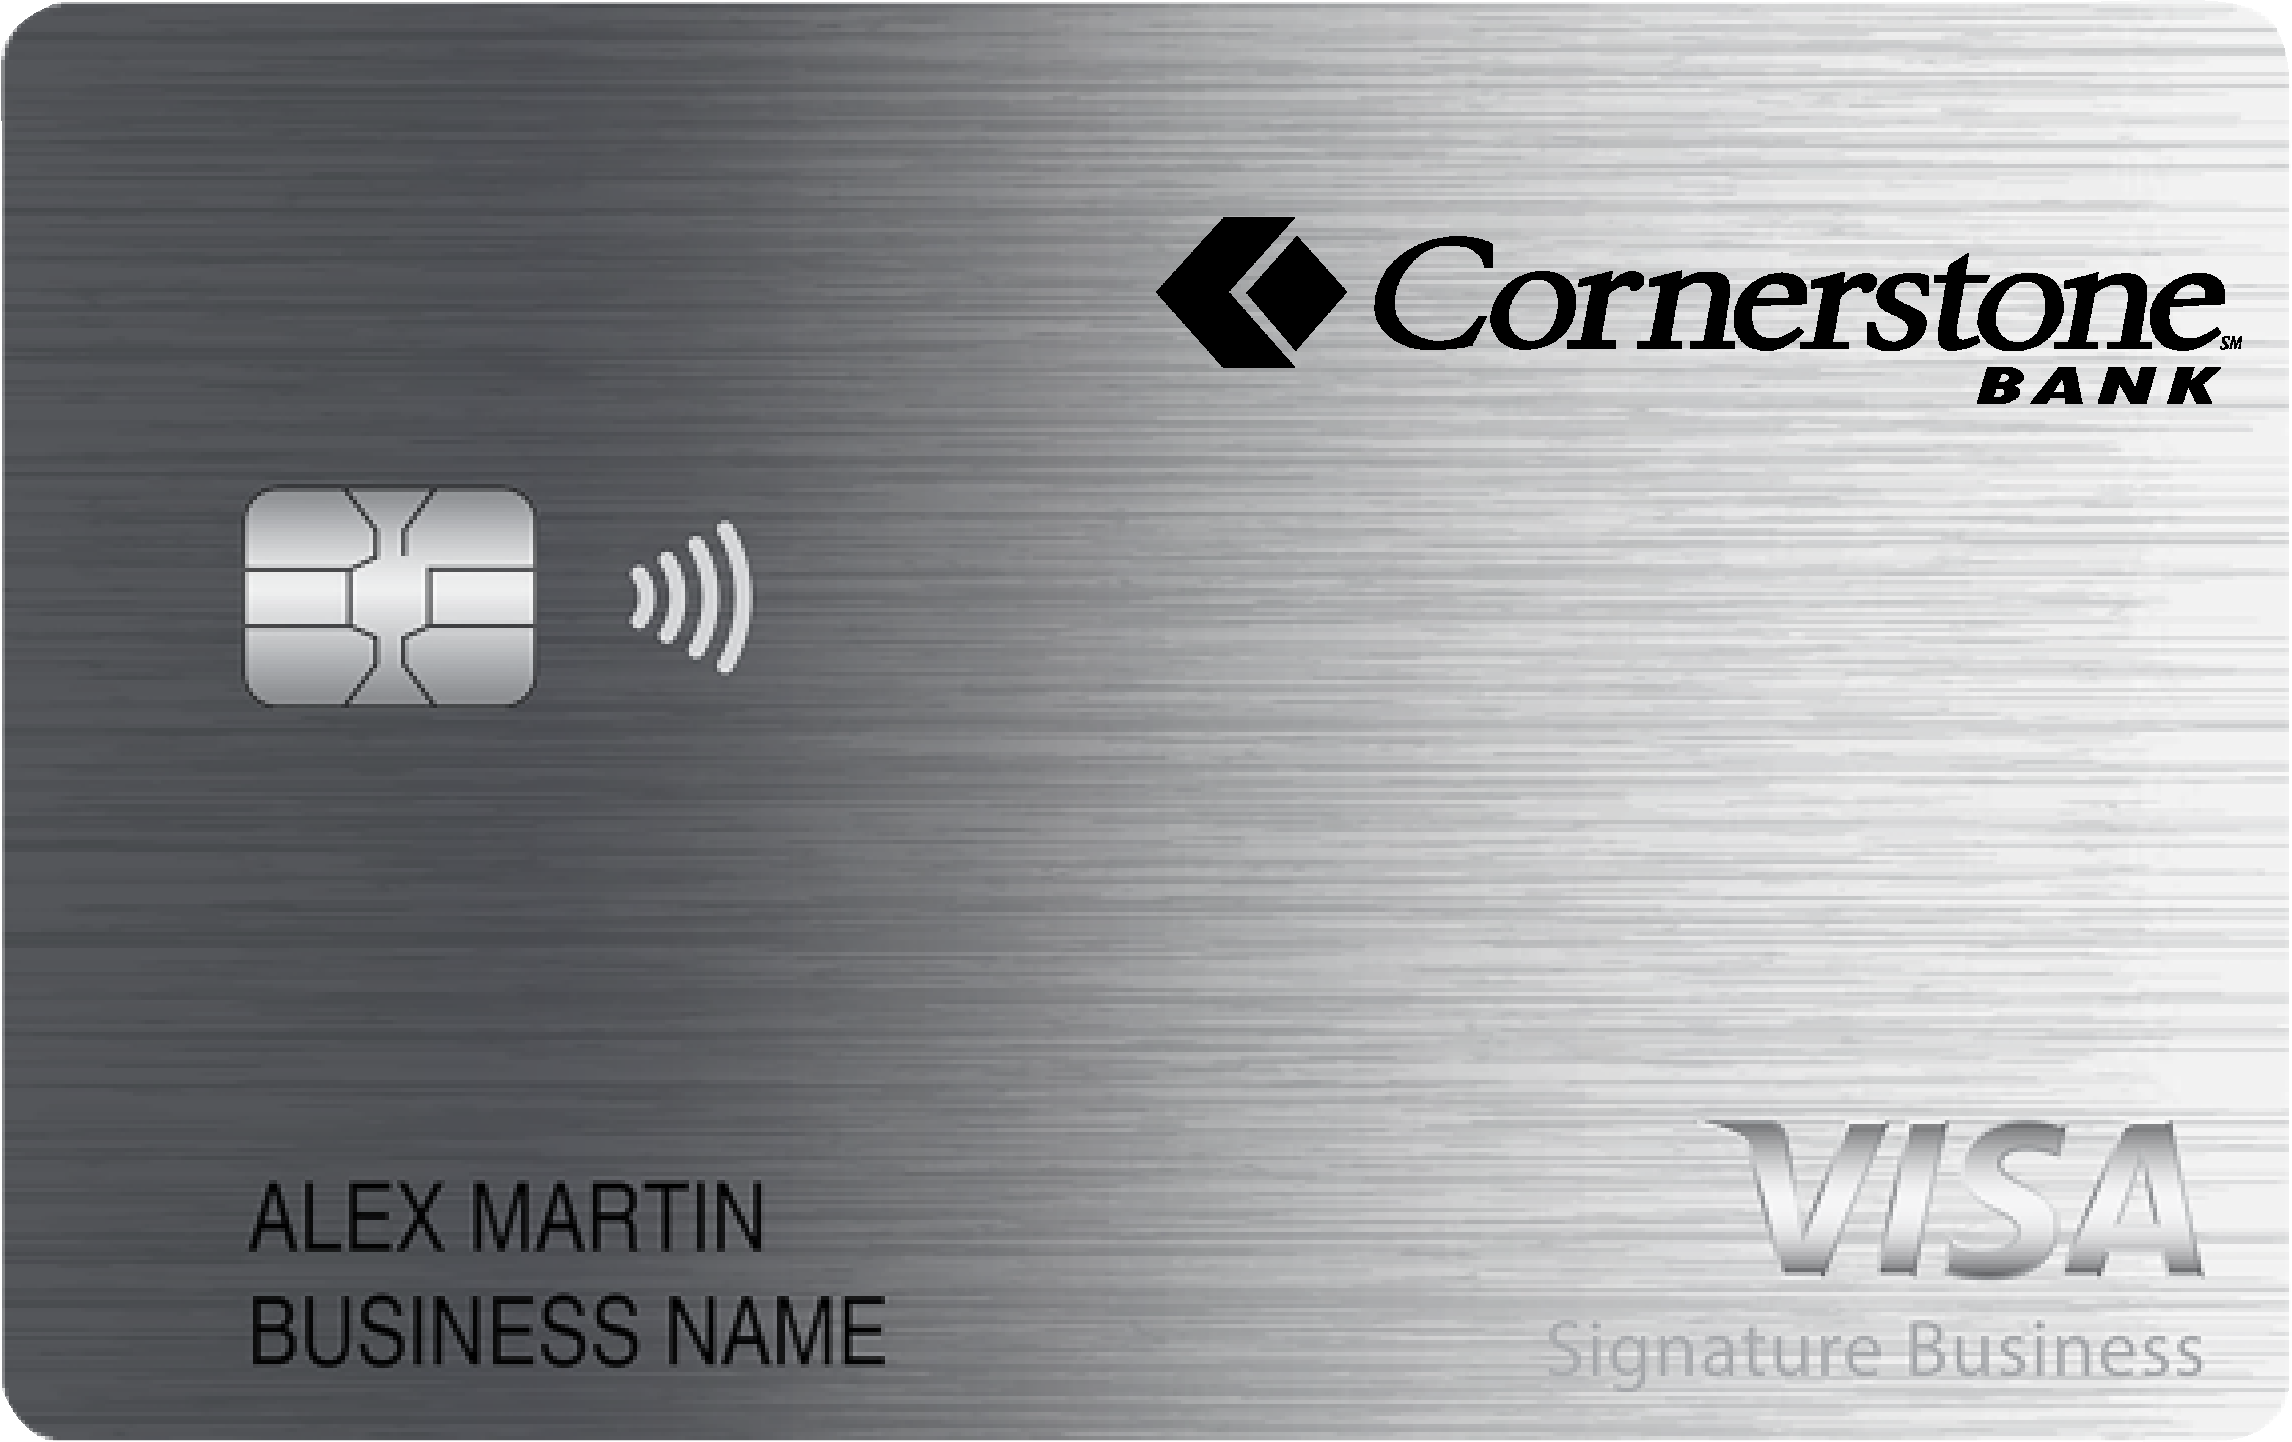 Cornerstone Bank Smart Business Rewards Card